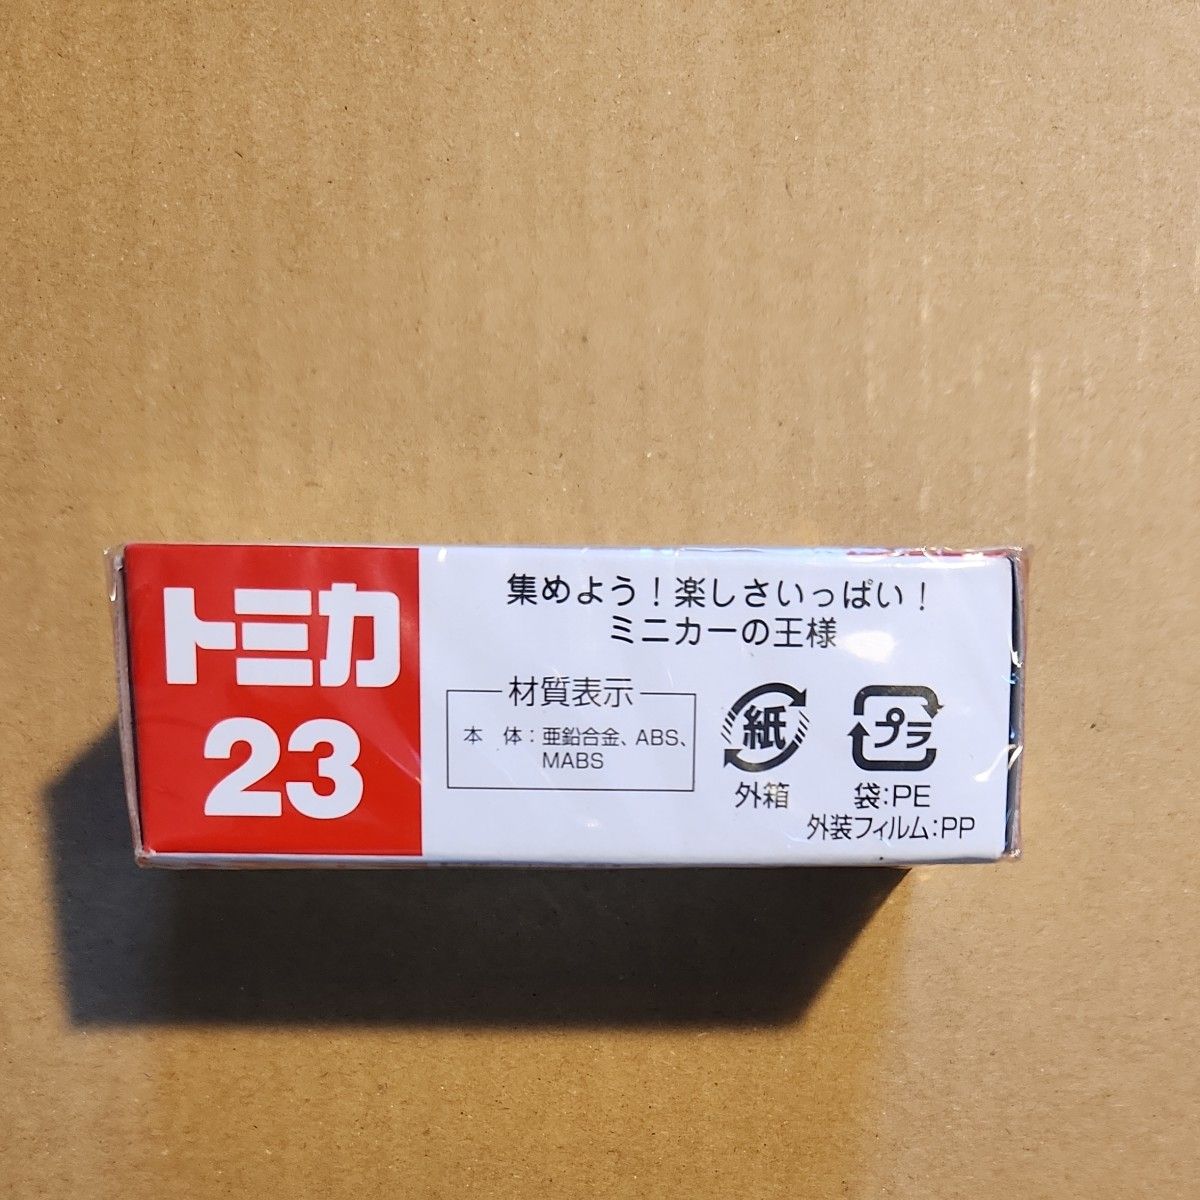 No.23 日産 GT-R （箱） （ノンスケール トミカ 859932） 絶版 廃盤